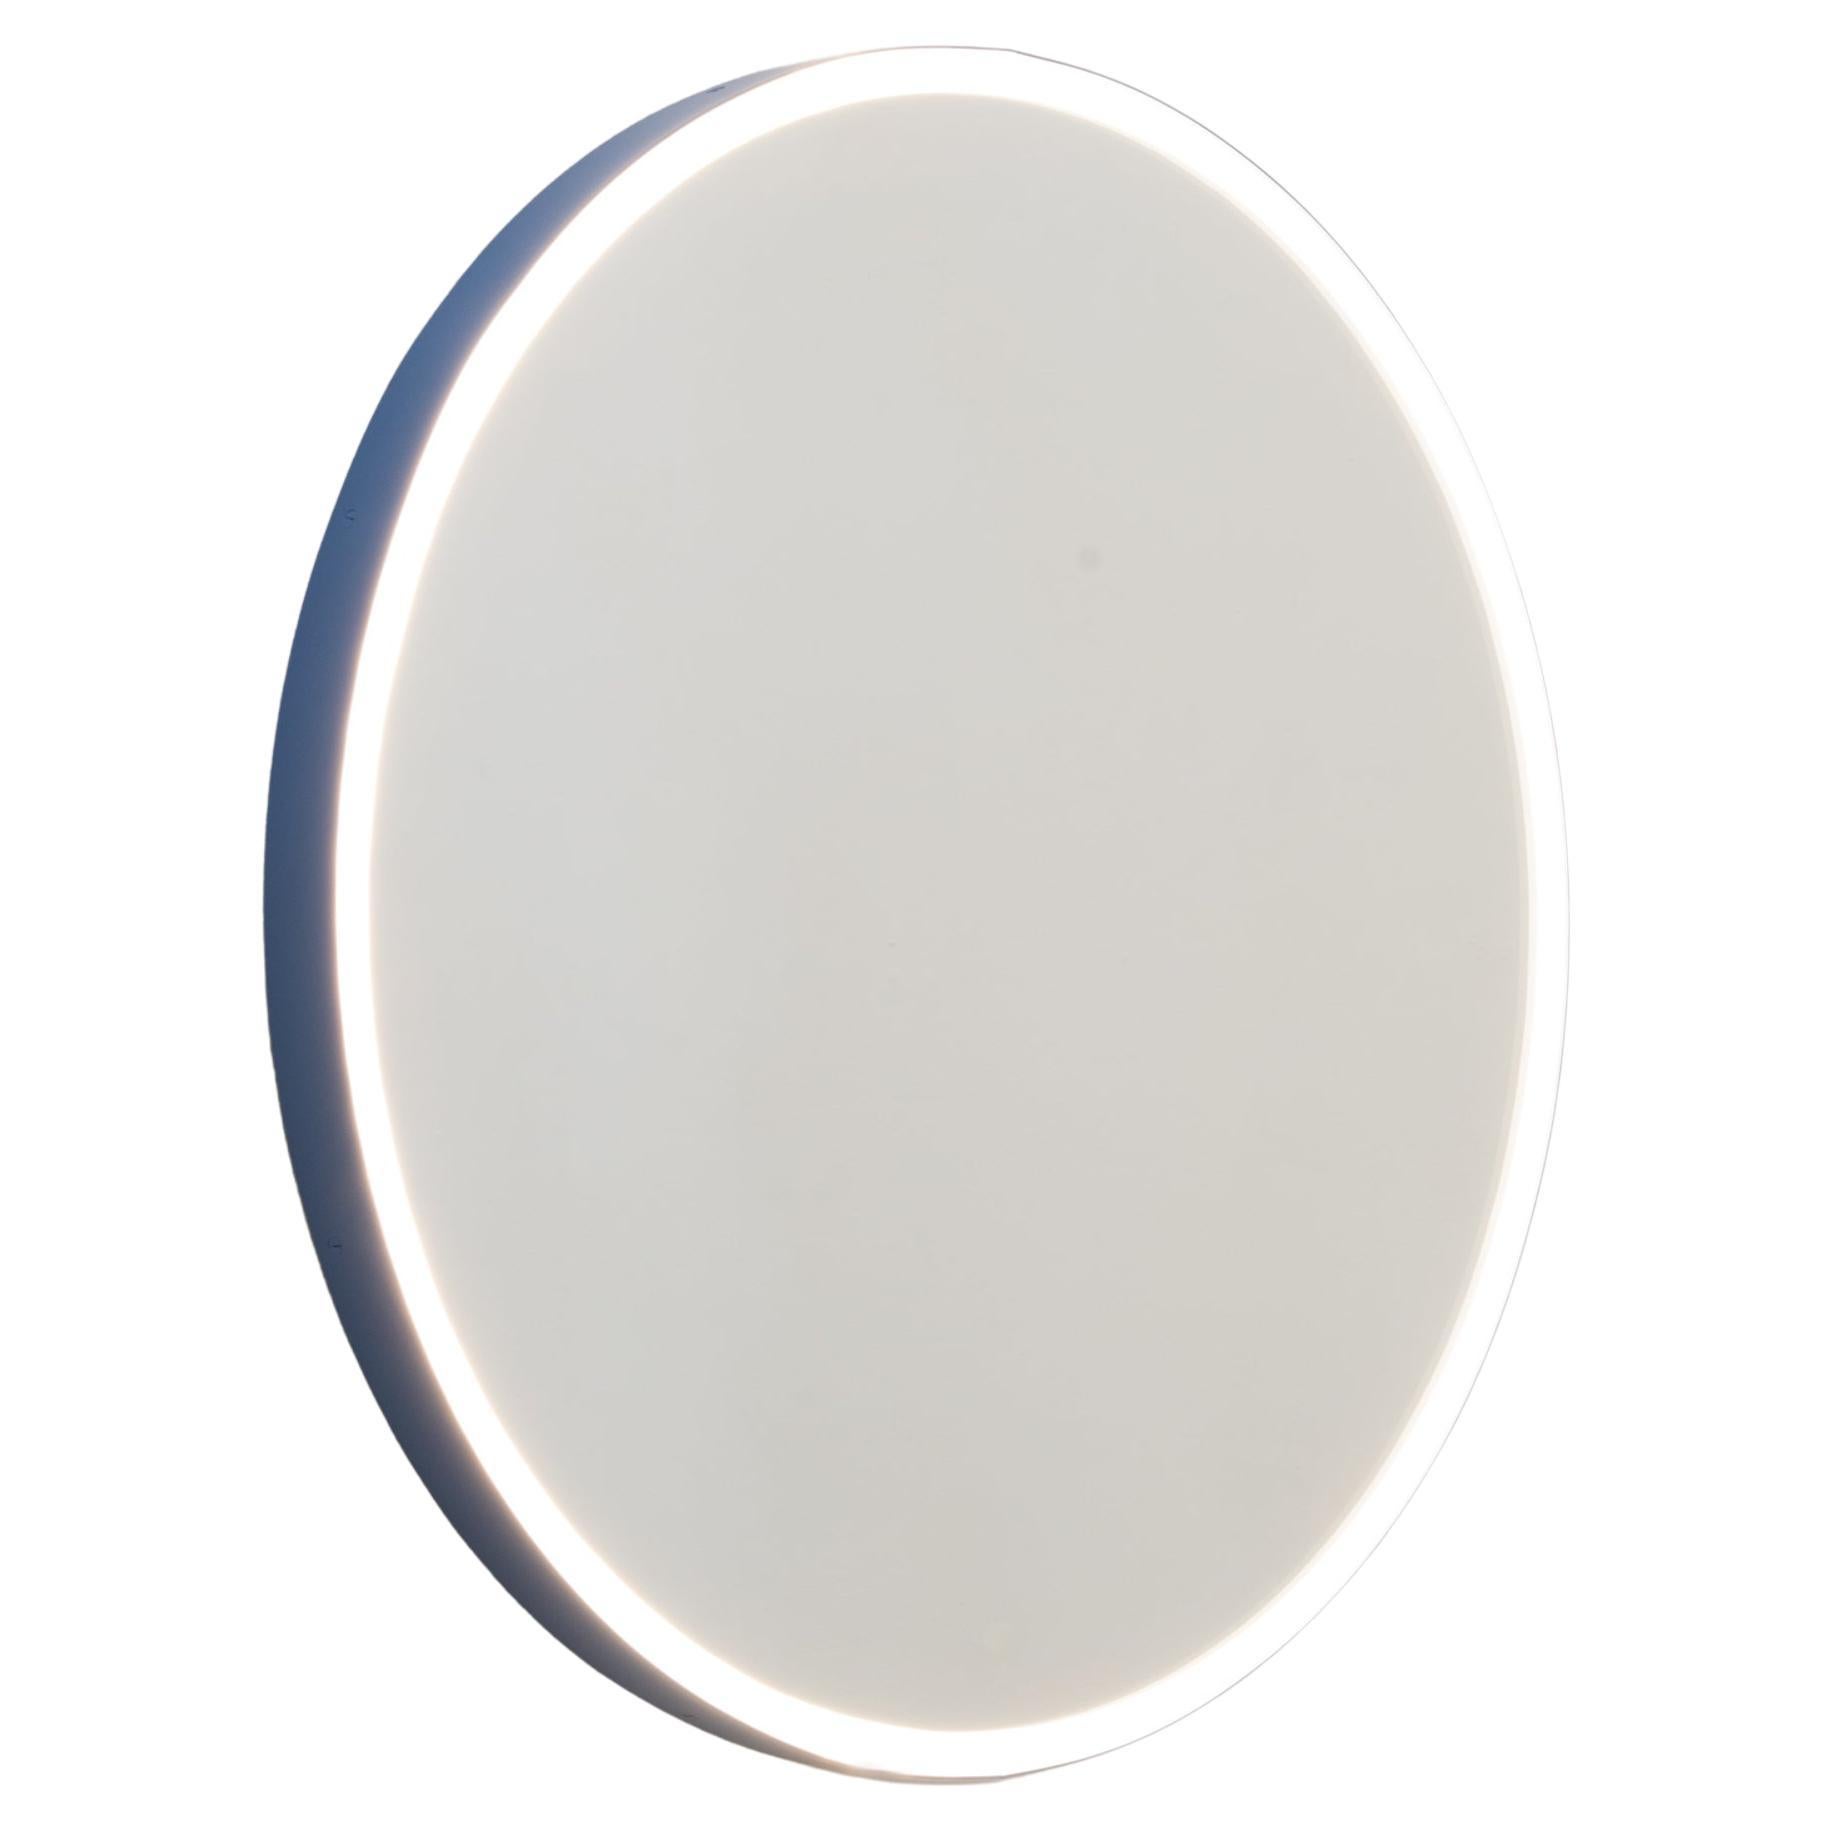 Orbis Front Illuminated Round Contemporary Mirror with Blue Frame, Medium